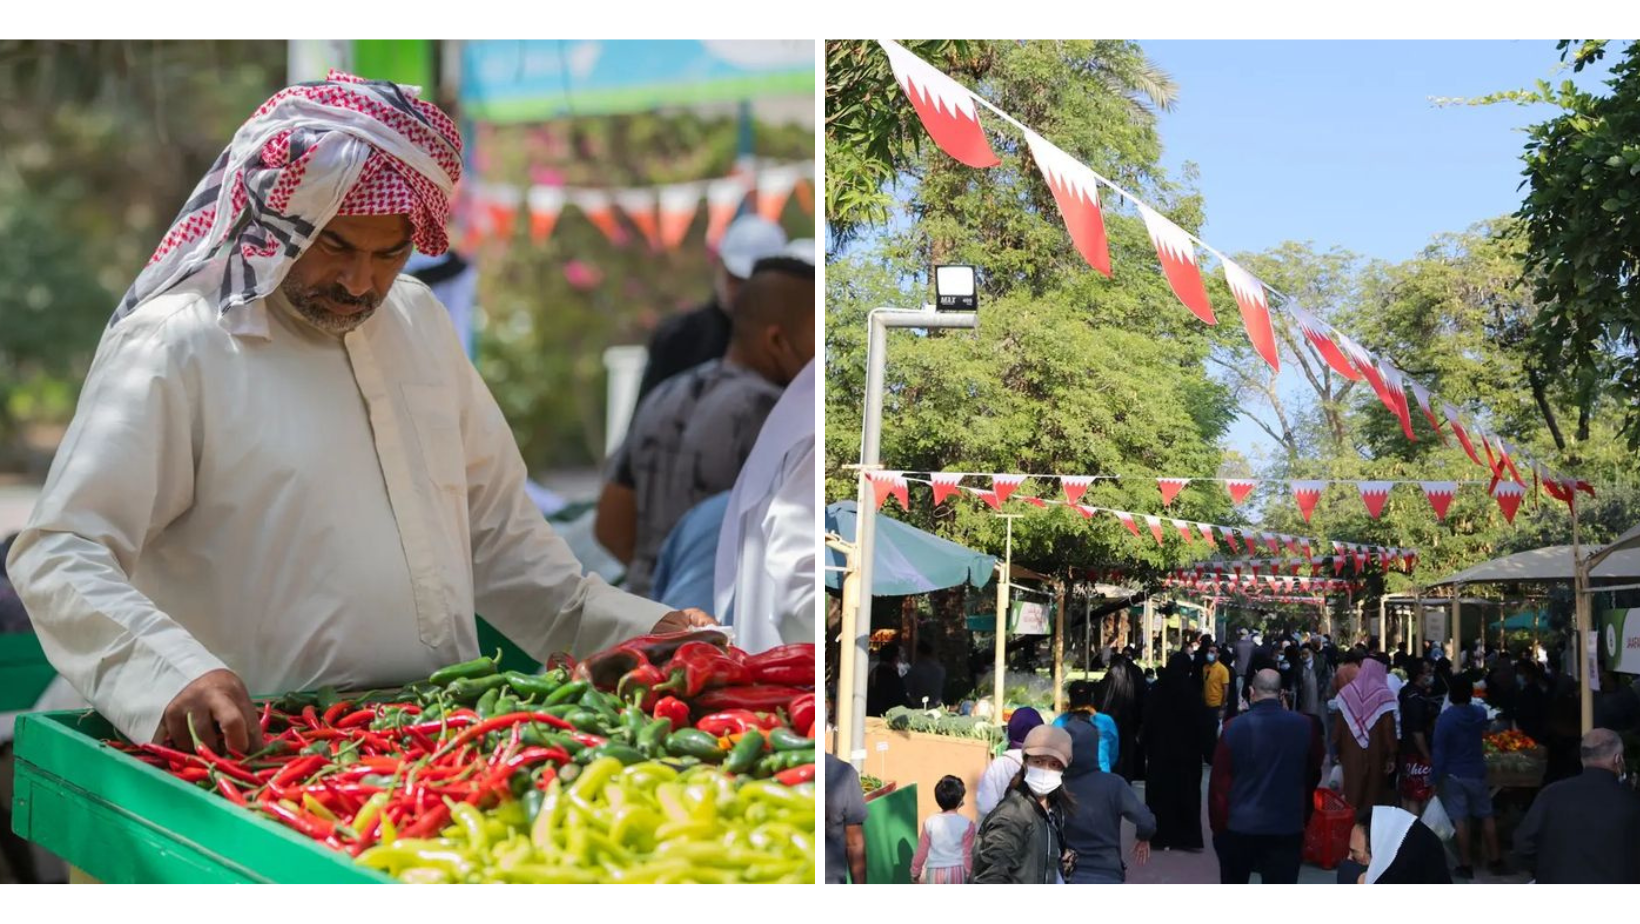 Farmers market in bahrain 2022